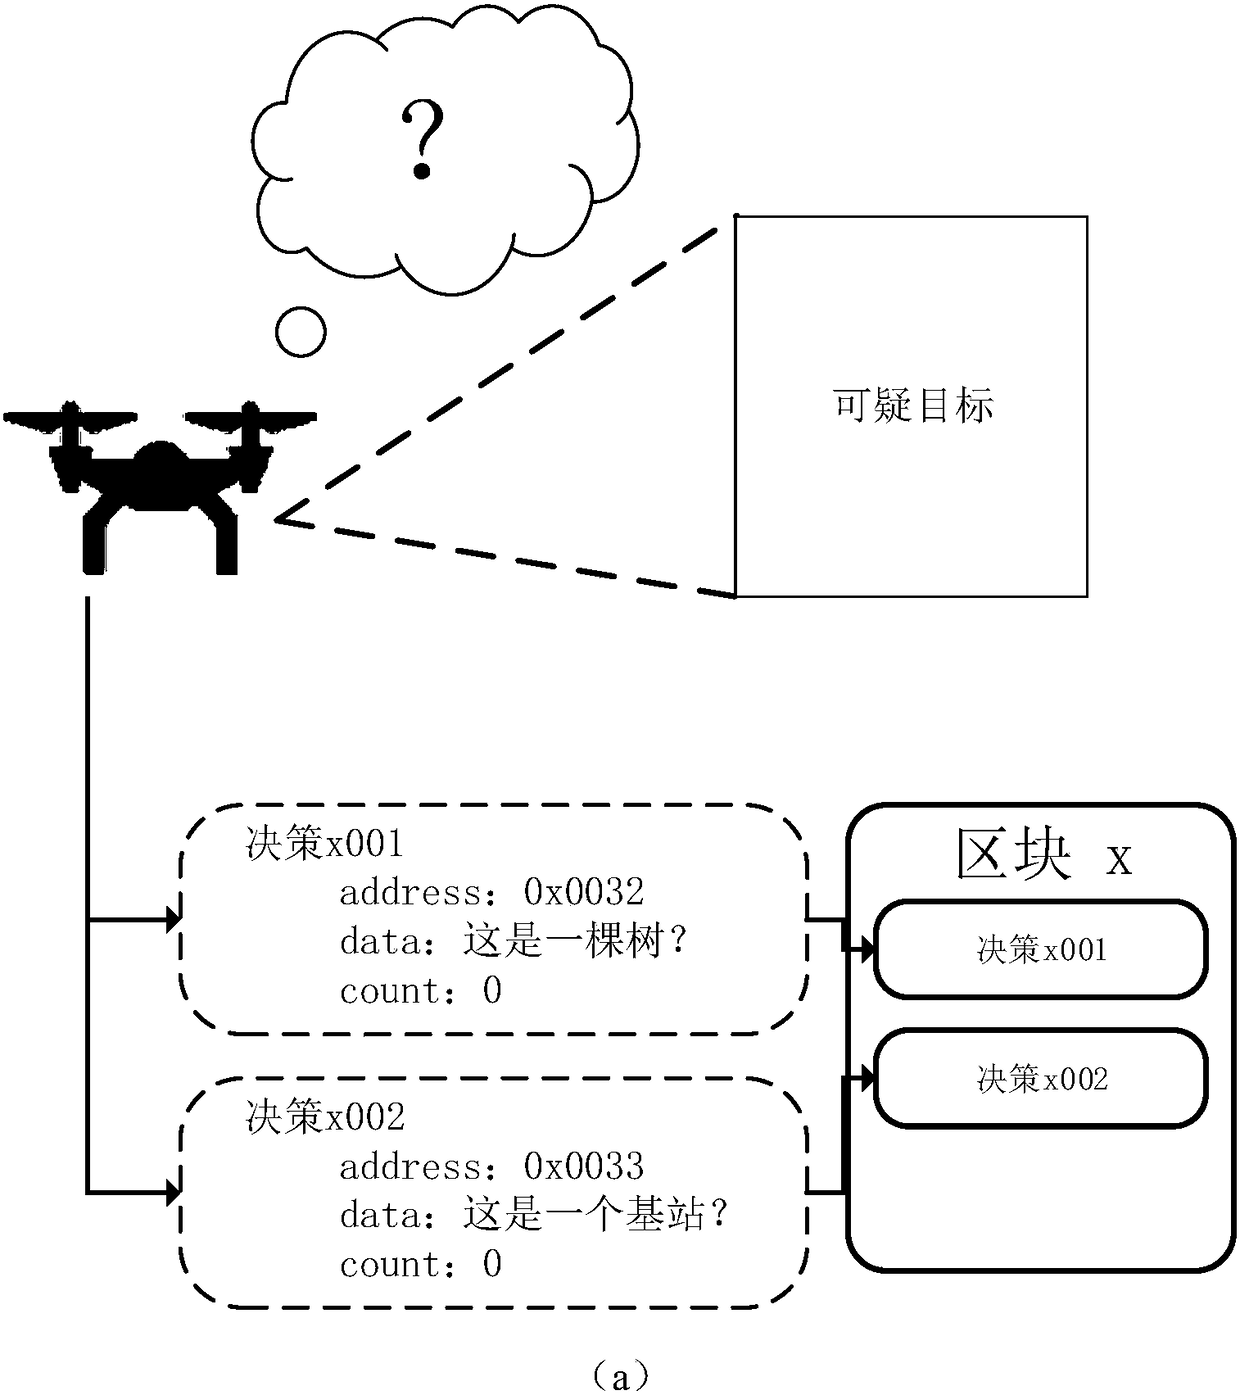 Blockchain-based unmanned aerial vehicle (UAV) group decision-making method